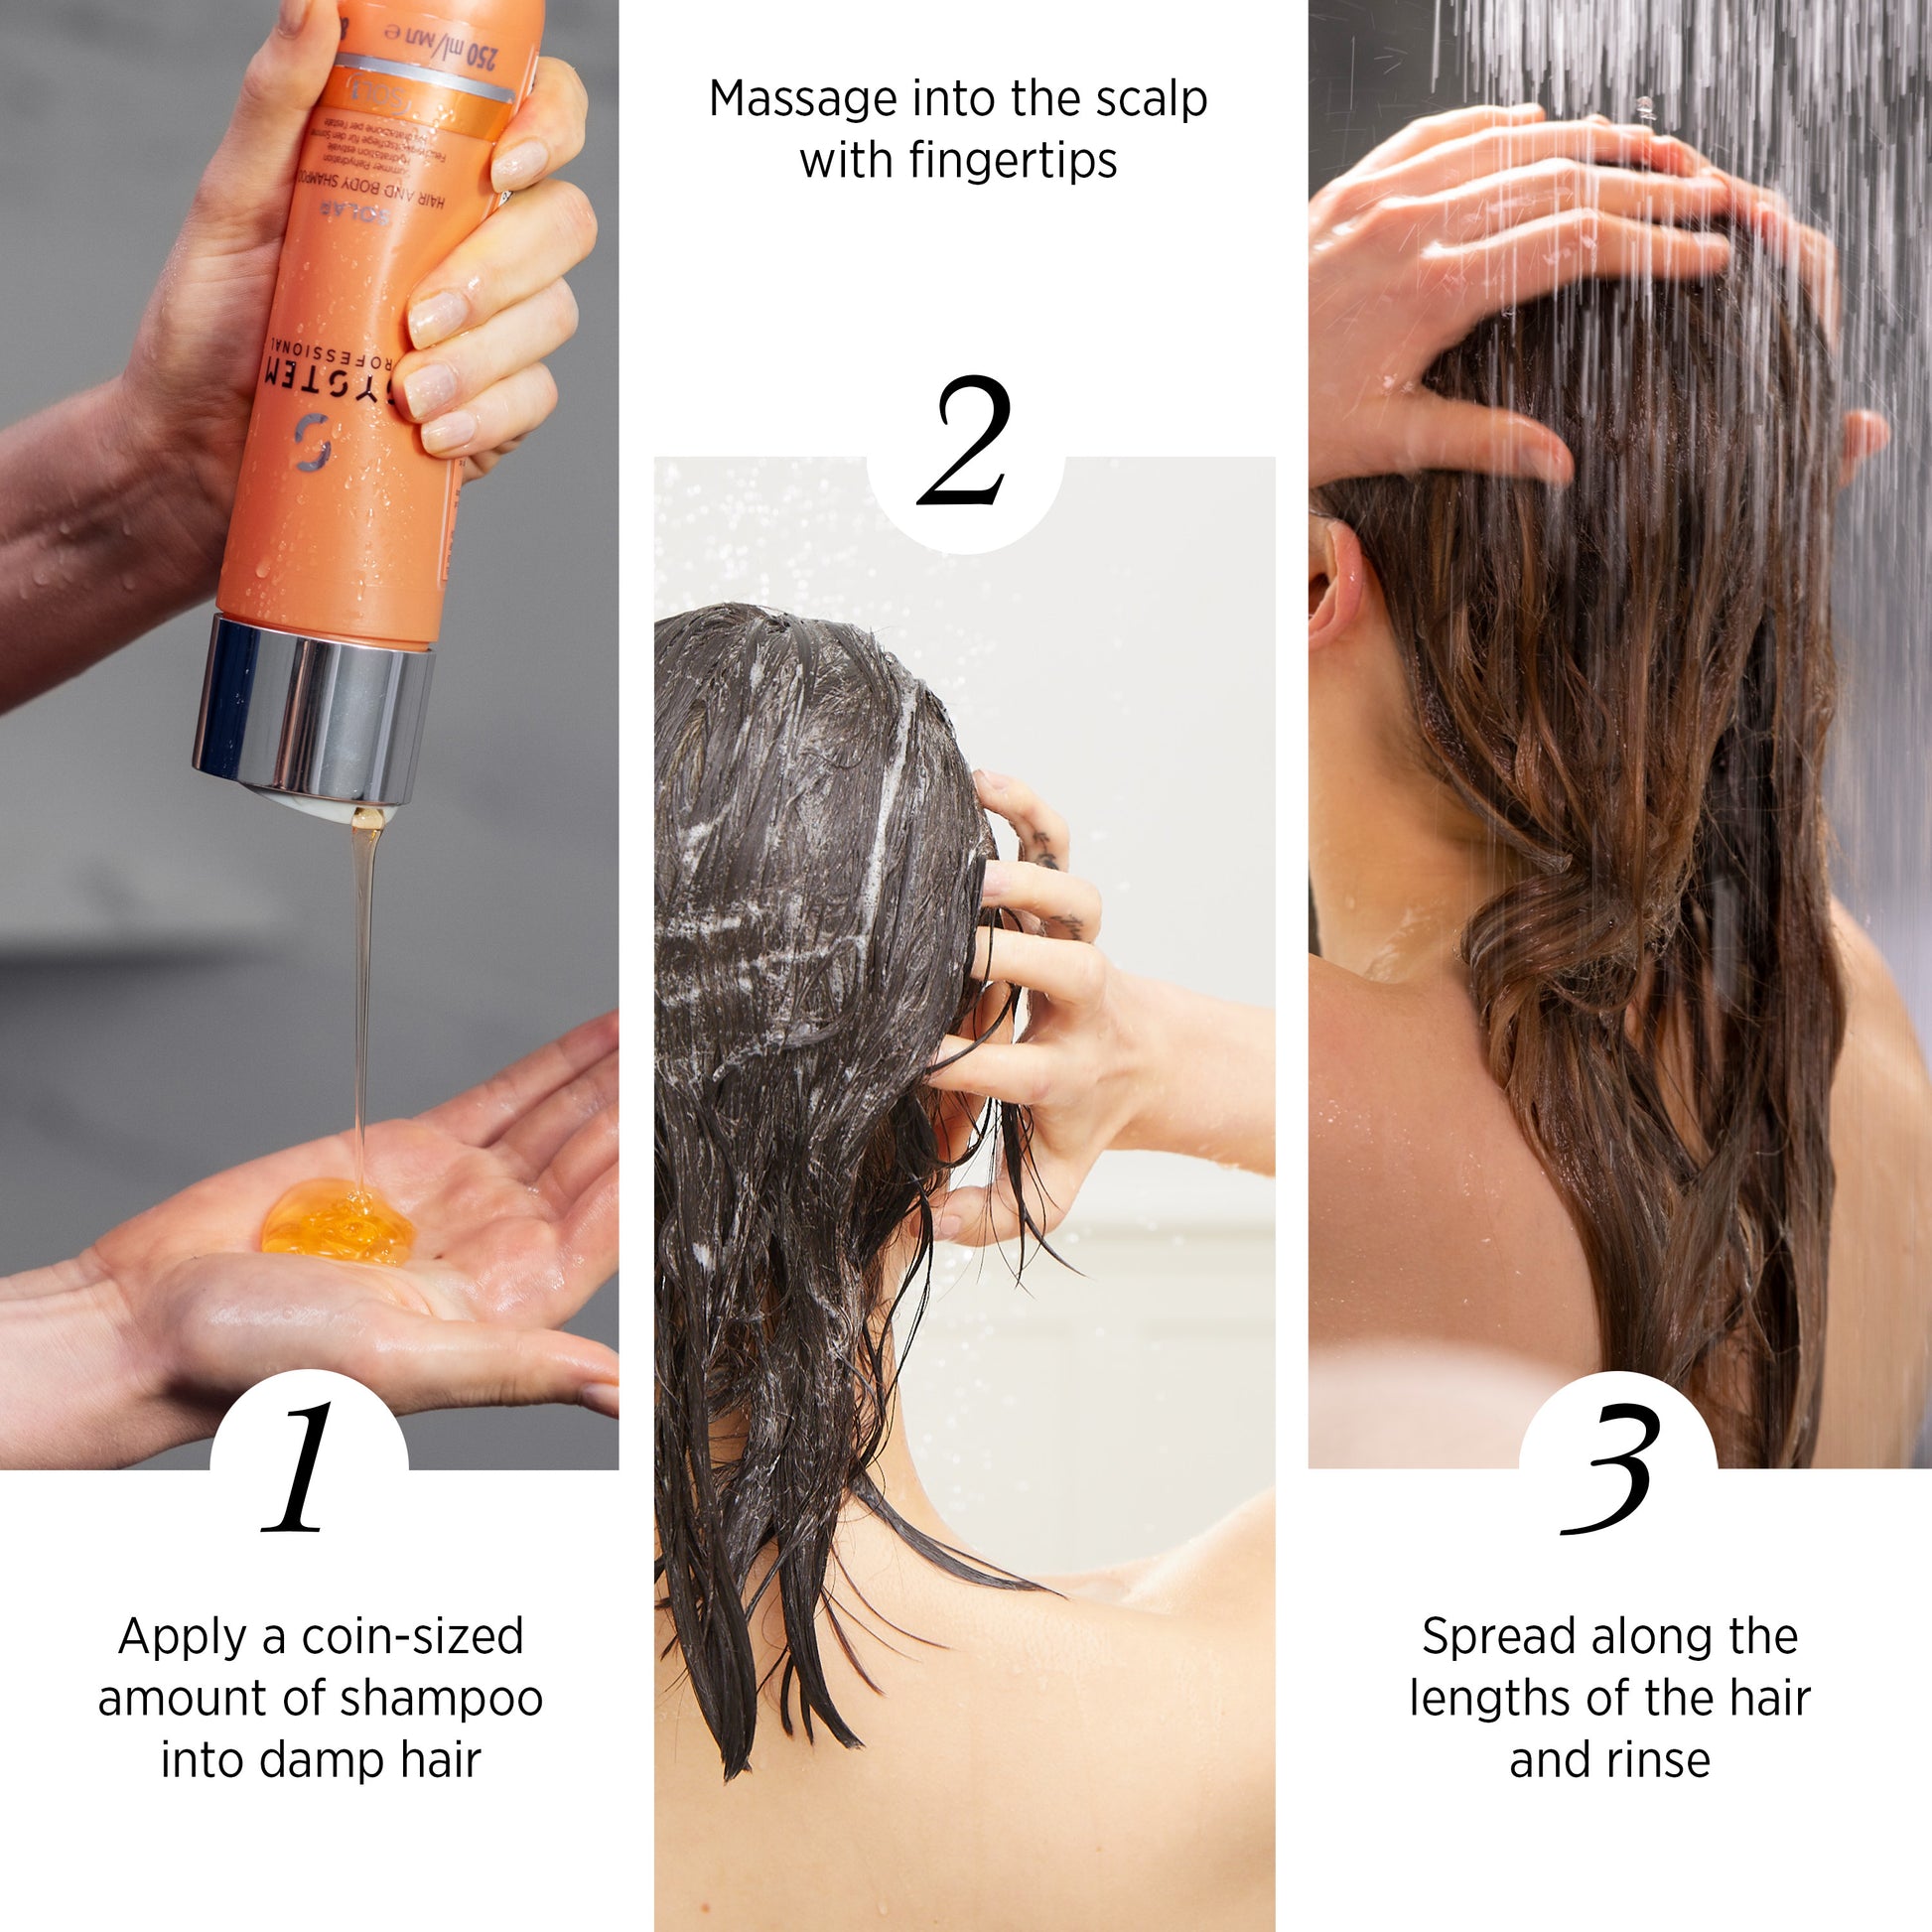 System Professional Solar Hair and Body Shampoo 250ml